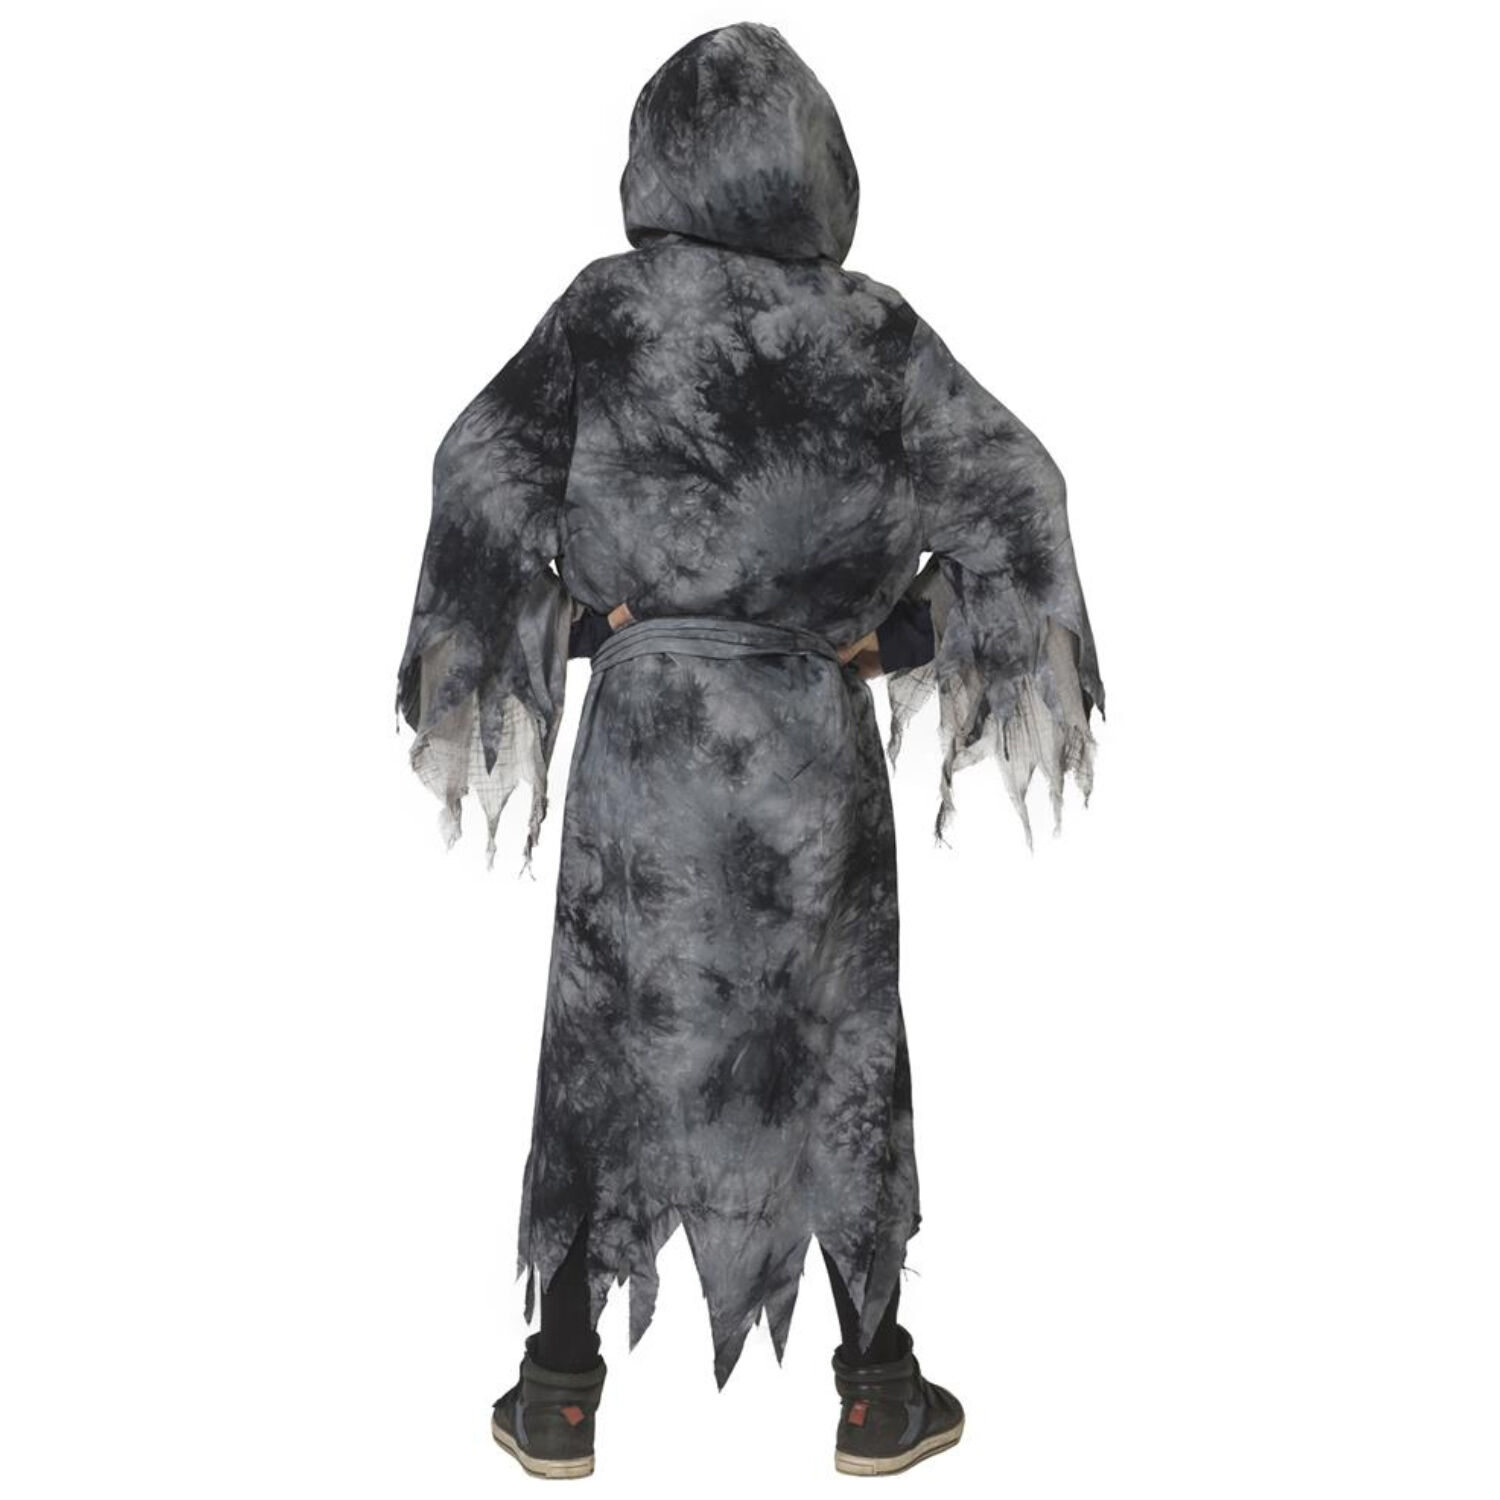 NEU Kinder-Kostüm Grauer Dämon, Kapuzenmantel mit Gürtel, schwarz-grau, Gr. 104-116 Bild 3